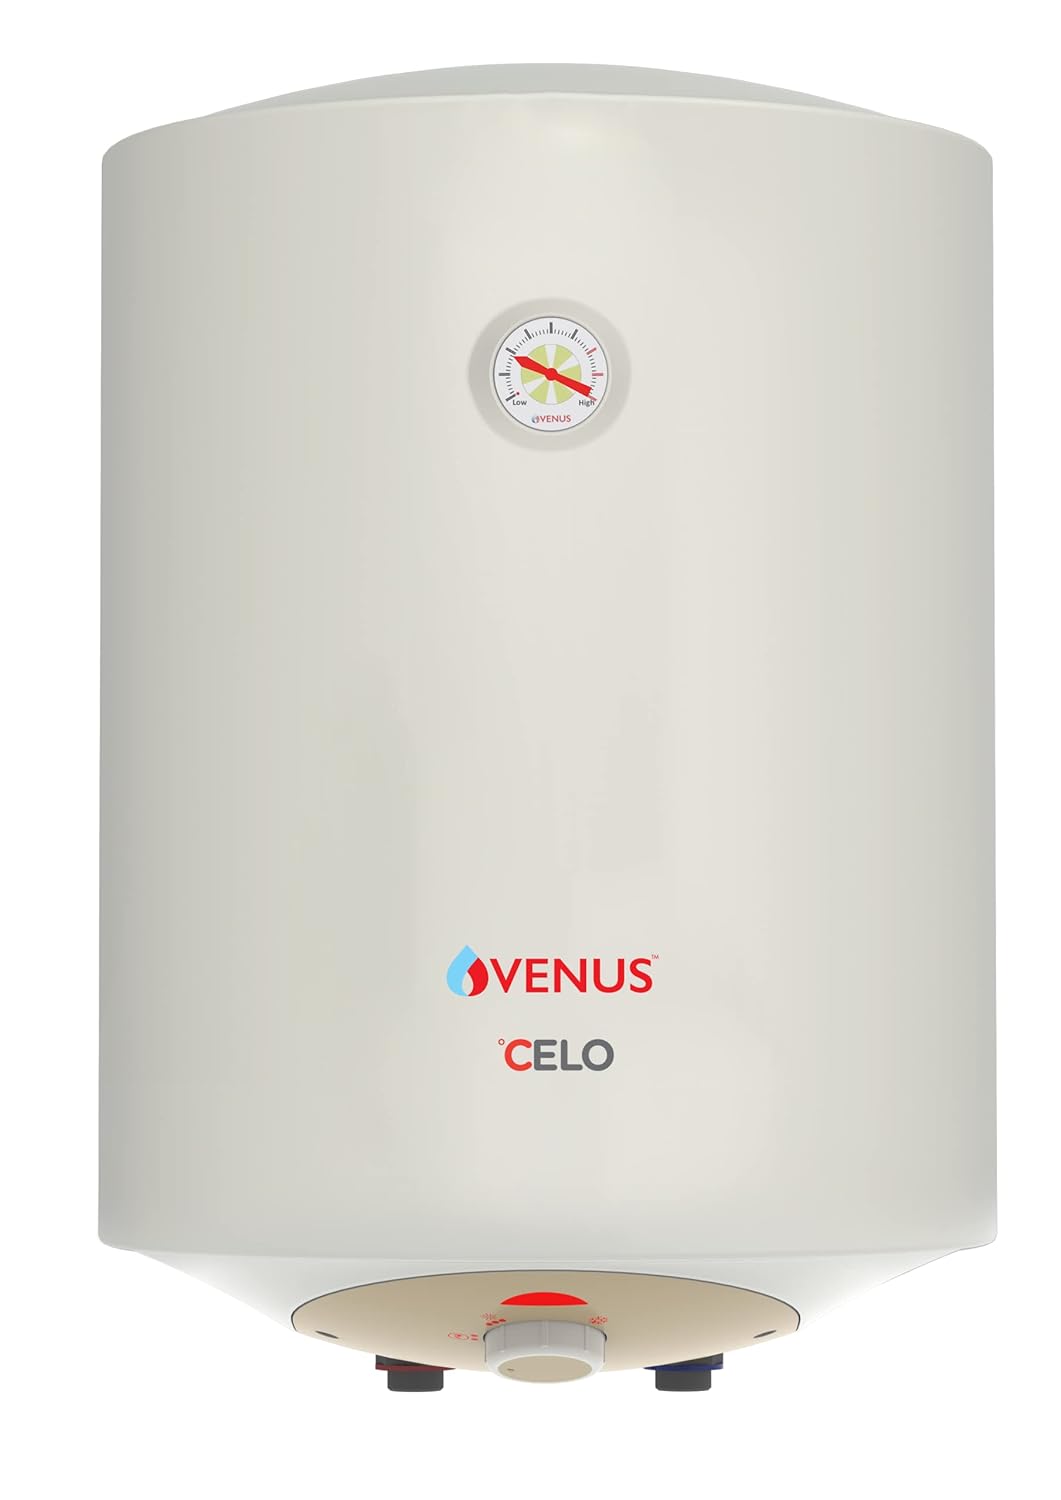 venus-celo-25cv-25-litre-storage-water-heater-ivory-bee-star-rating-5-stars-